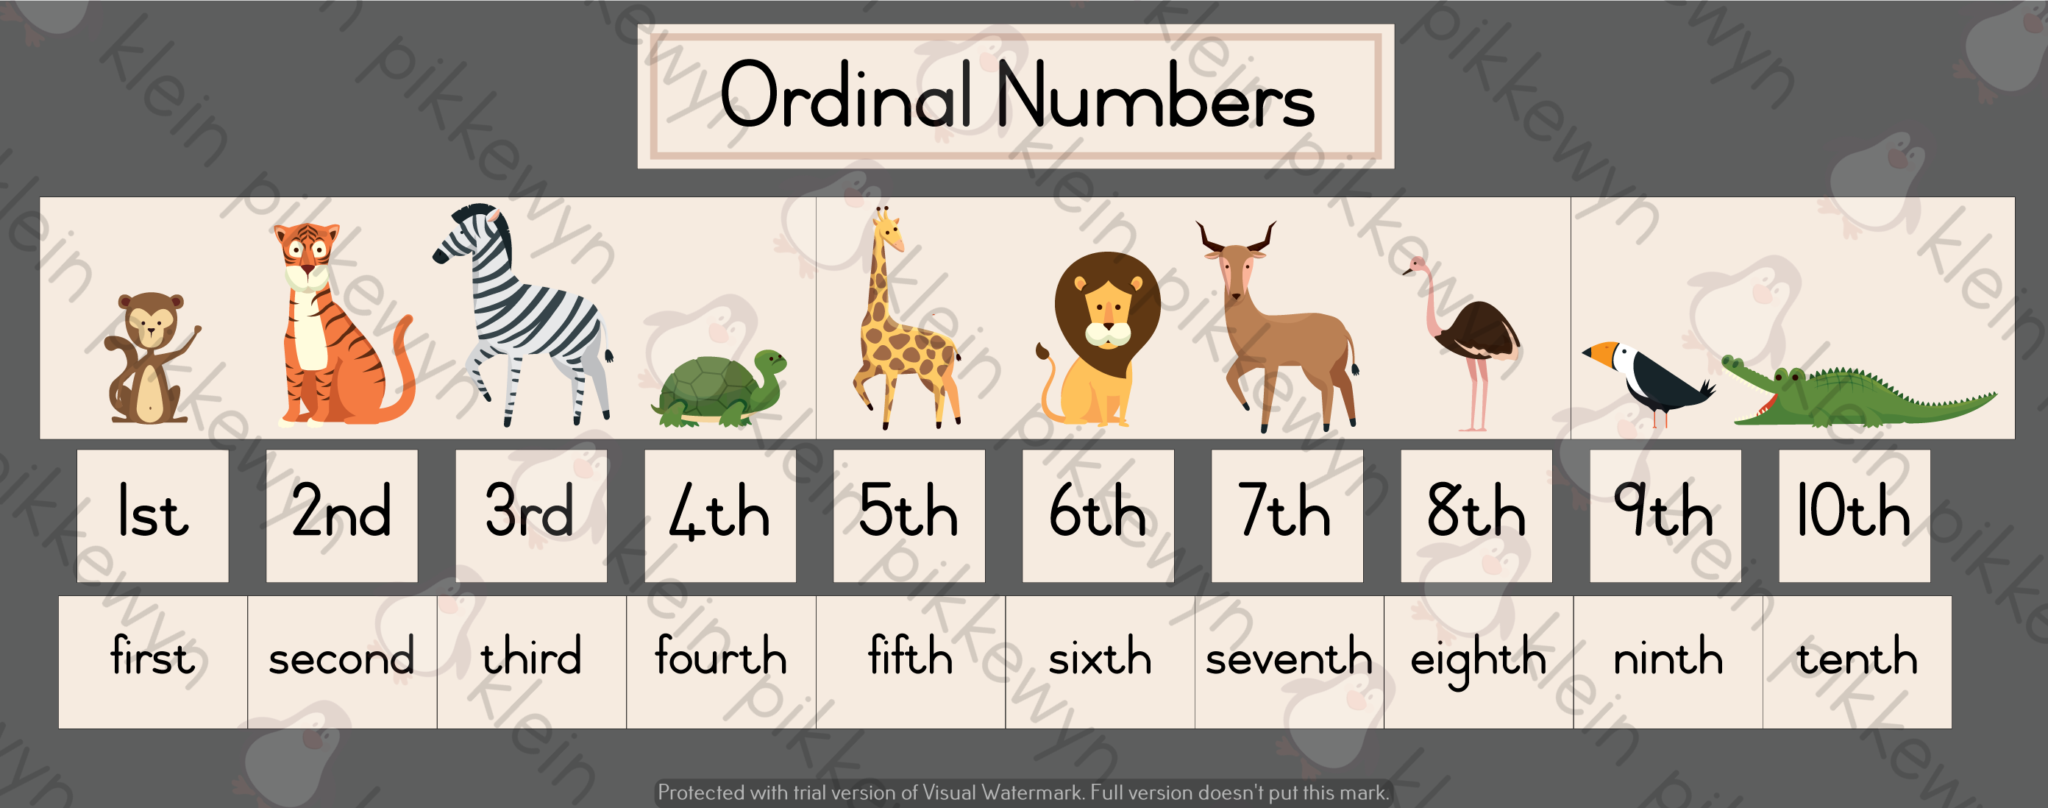 ordinal-numbers-esl-flashcards-ordinal-number-flashcard-ordinal-images